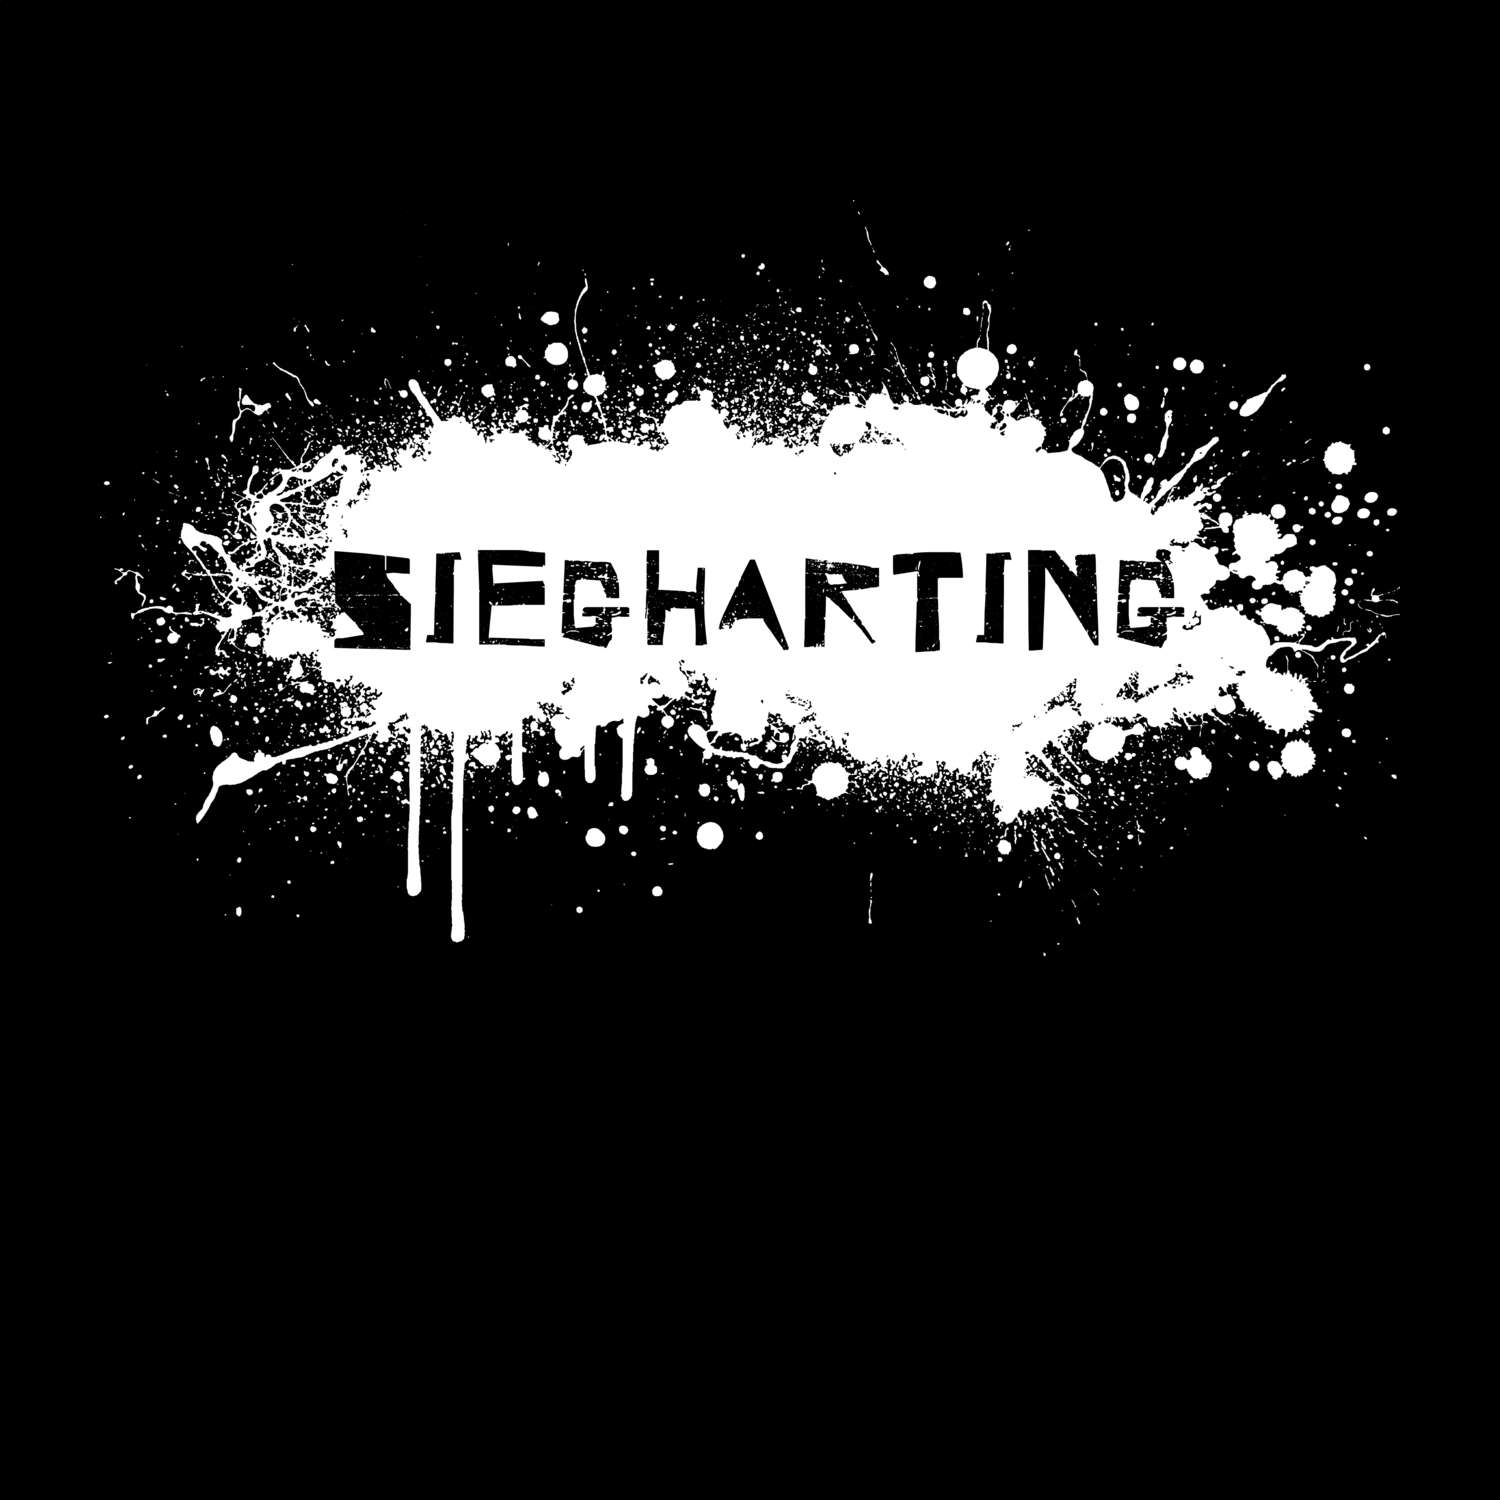 Siegharting T-Shirt »Paint Splash Punk«